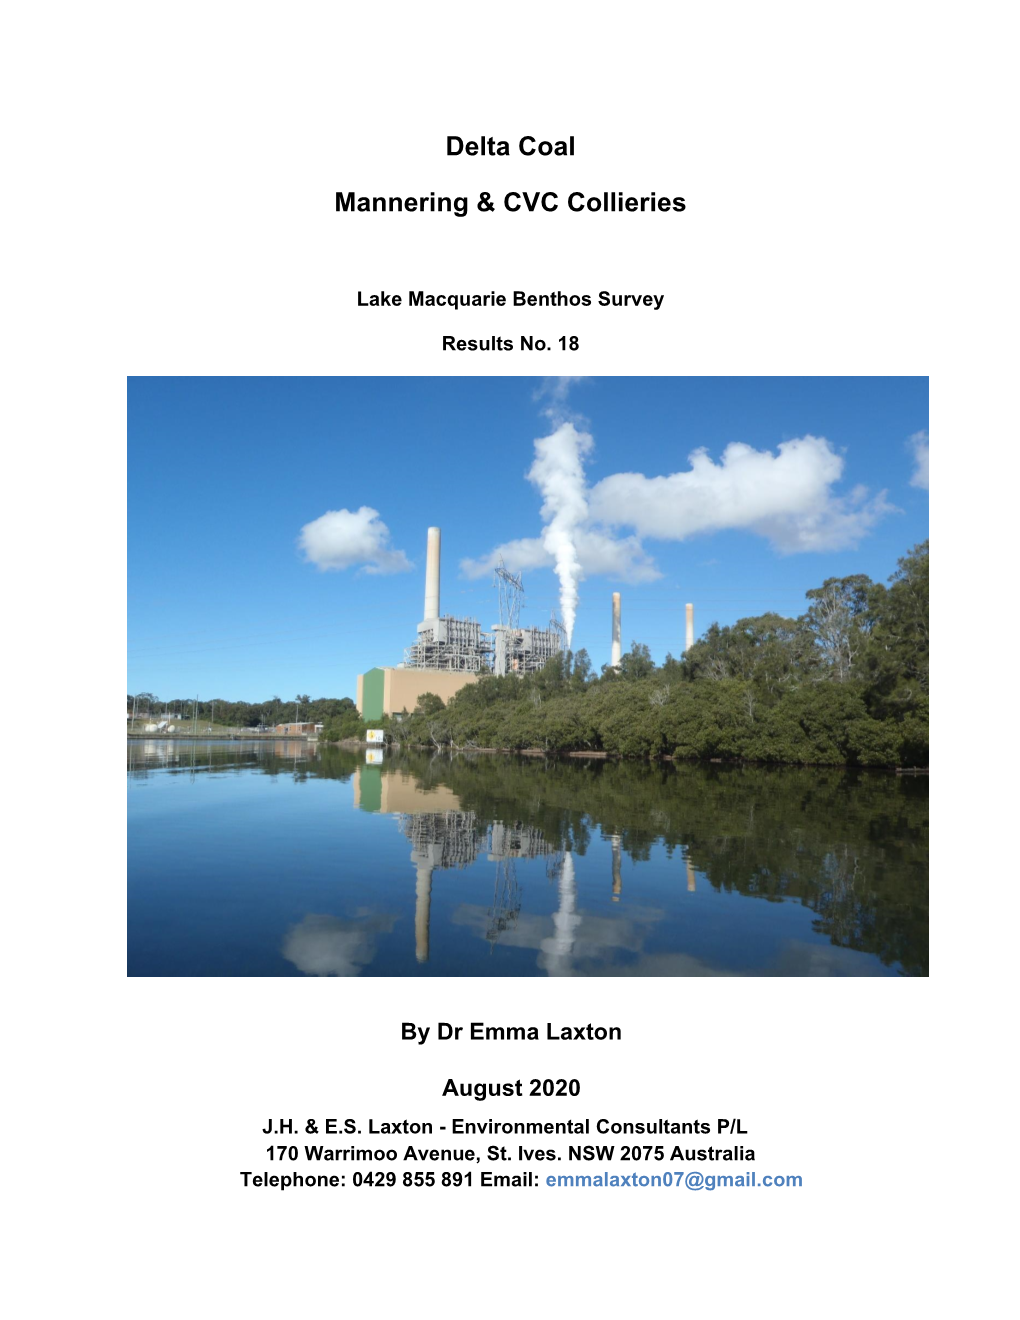 Delta Coal Mannering & CVC Collieries